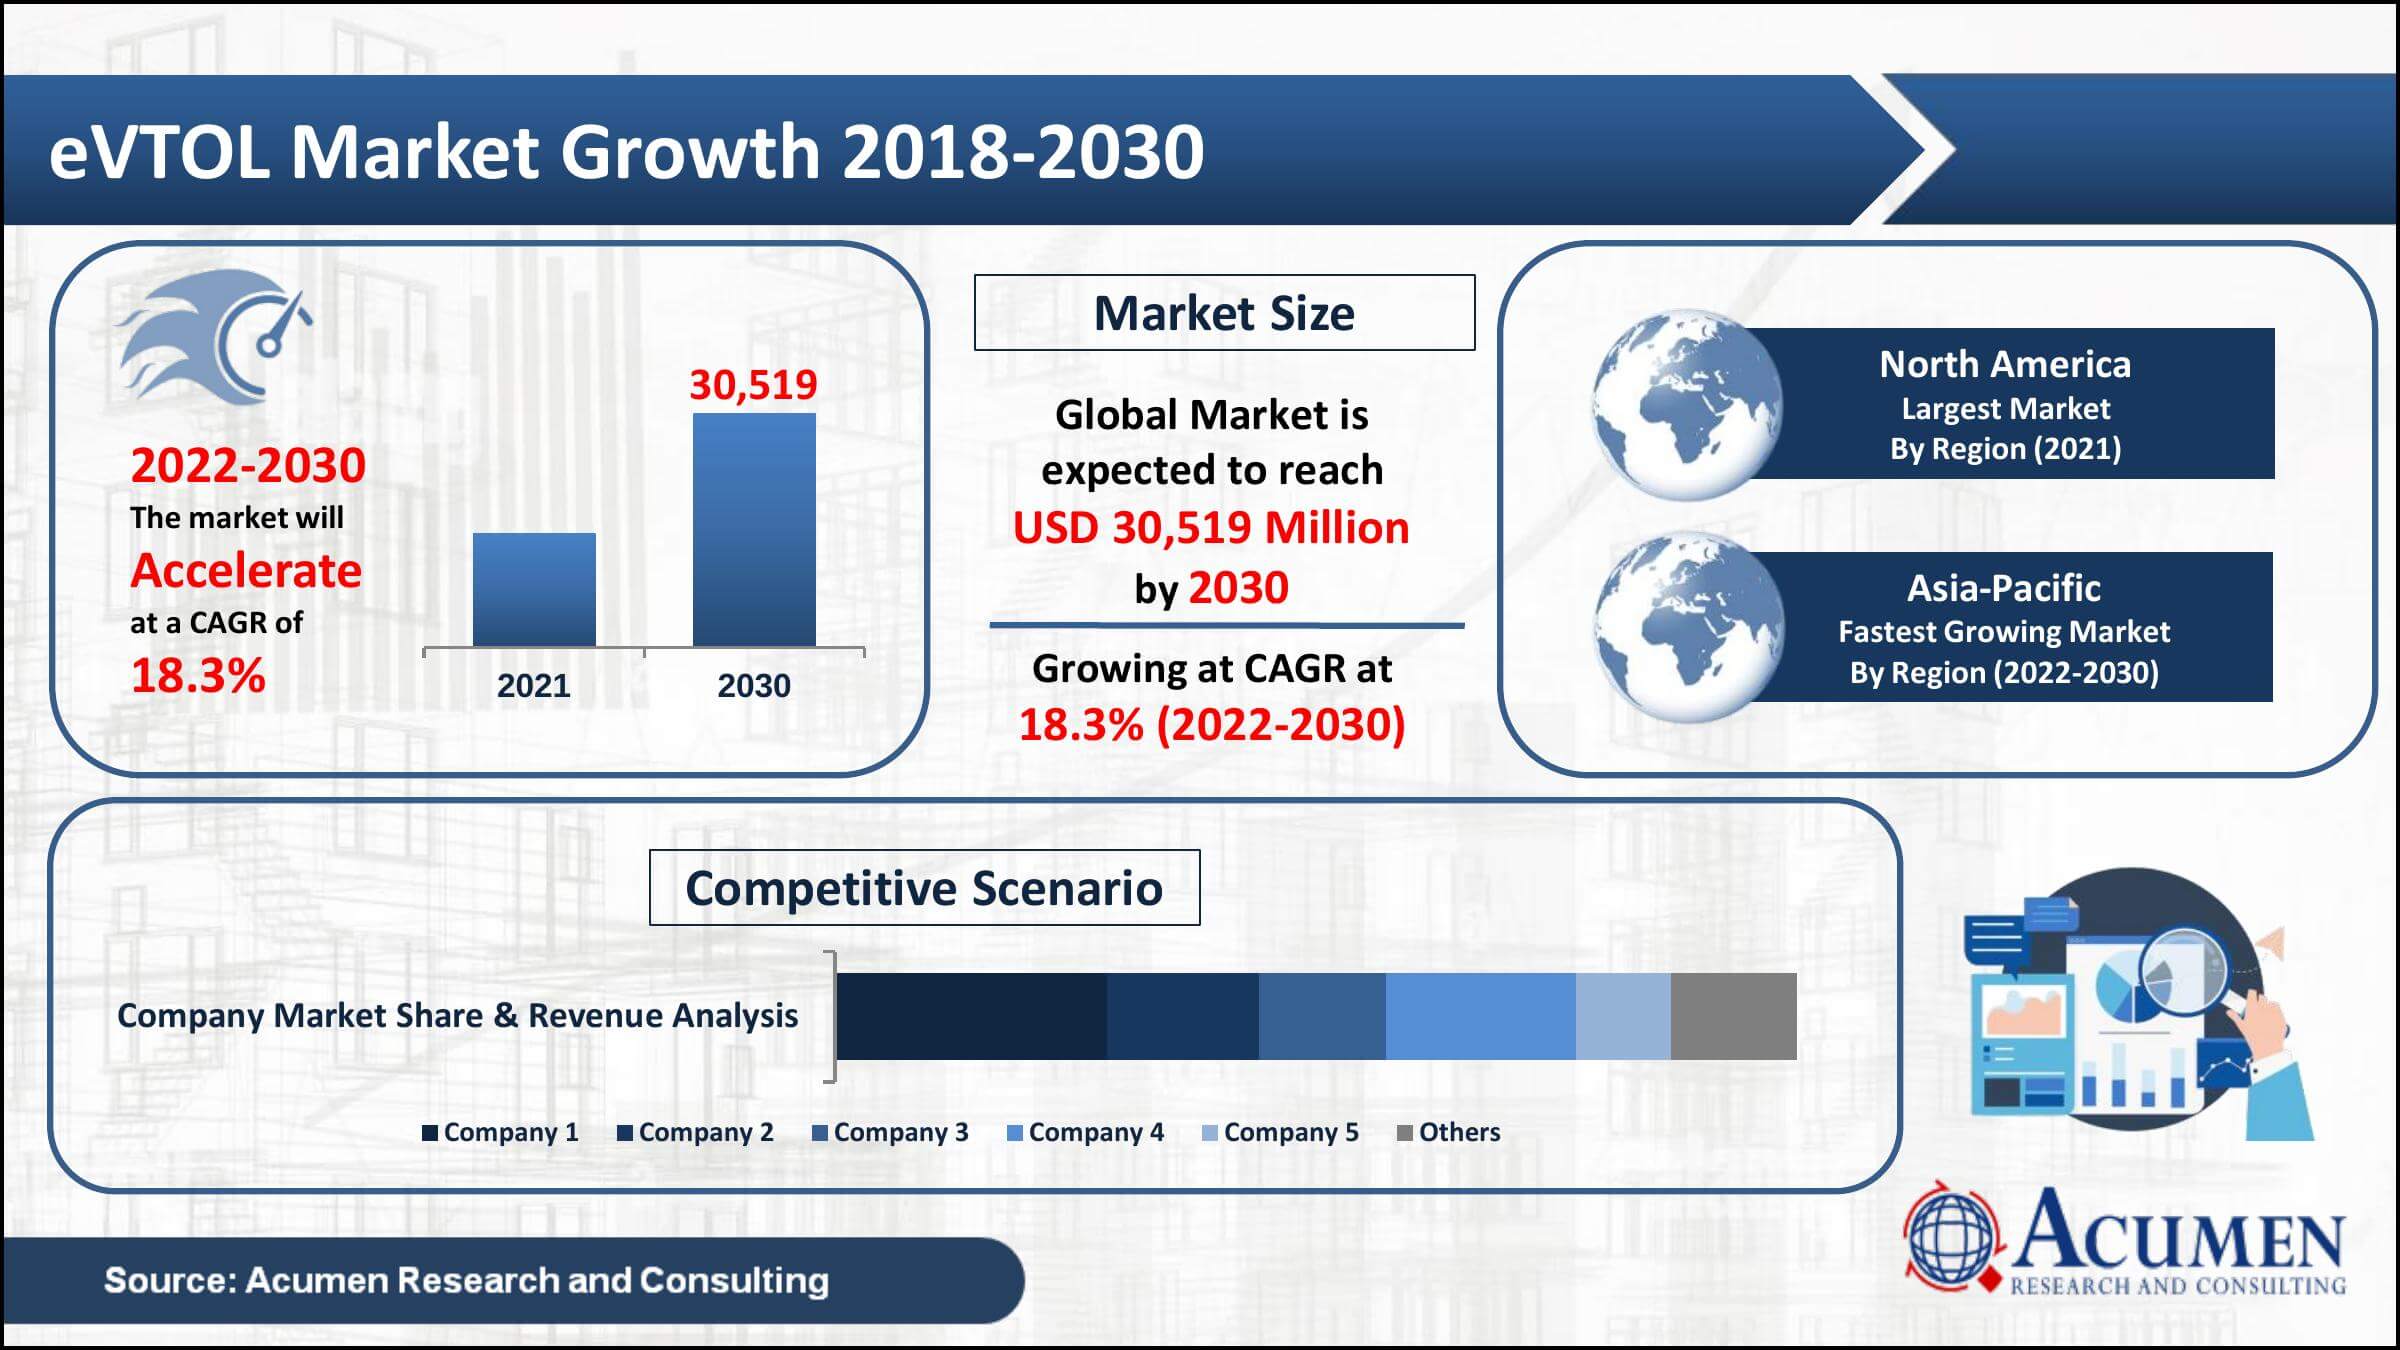 eVTOL Market value set to reach USD 30,519 Million by year 2030 at 18.3% CAGR